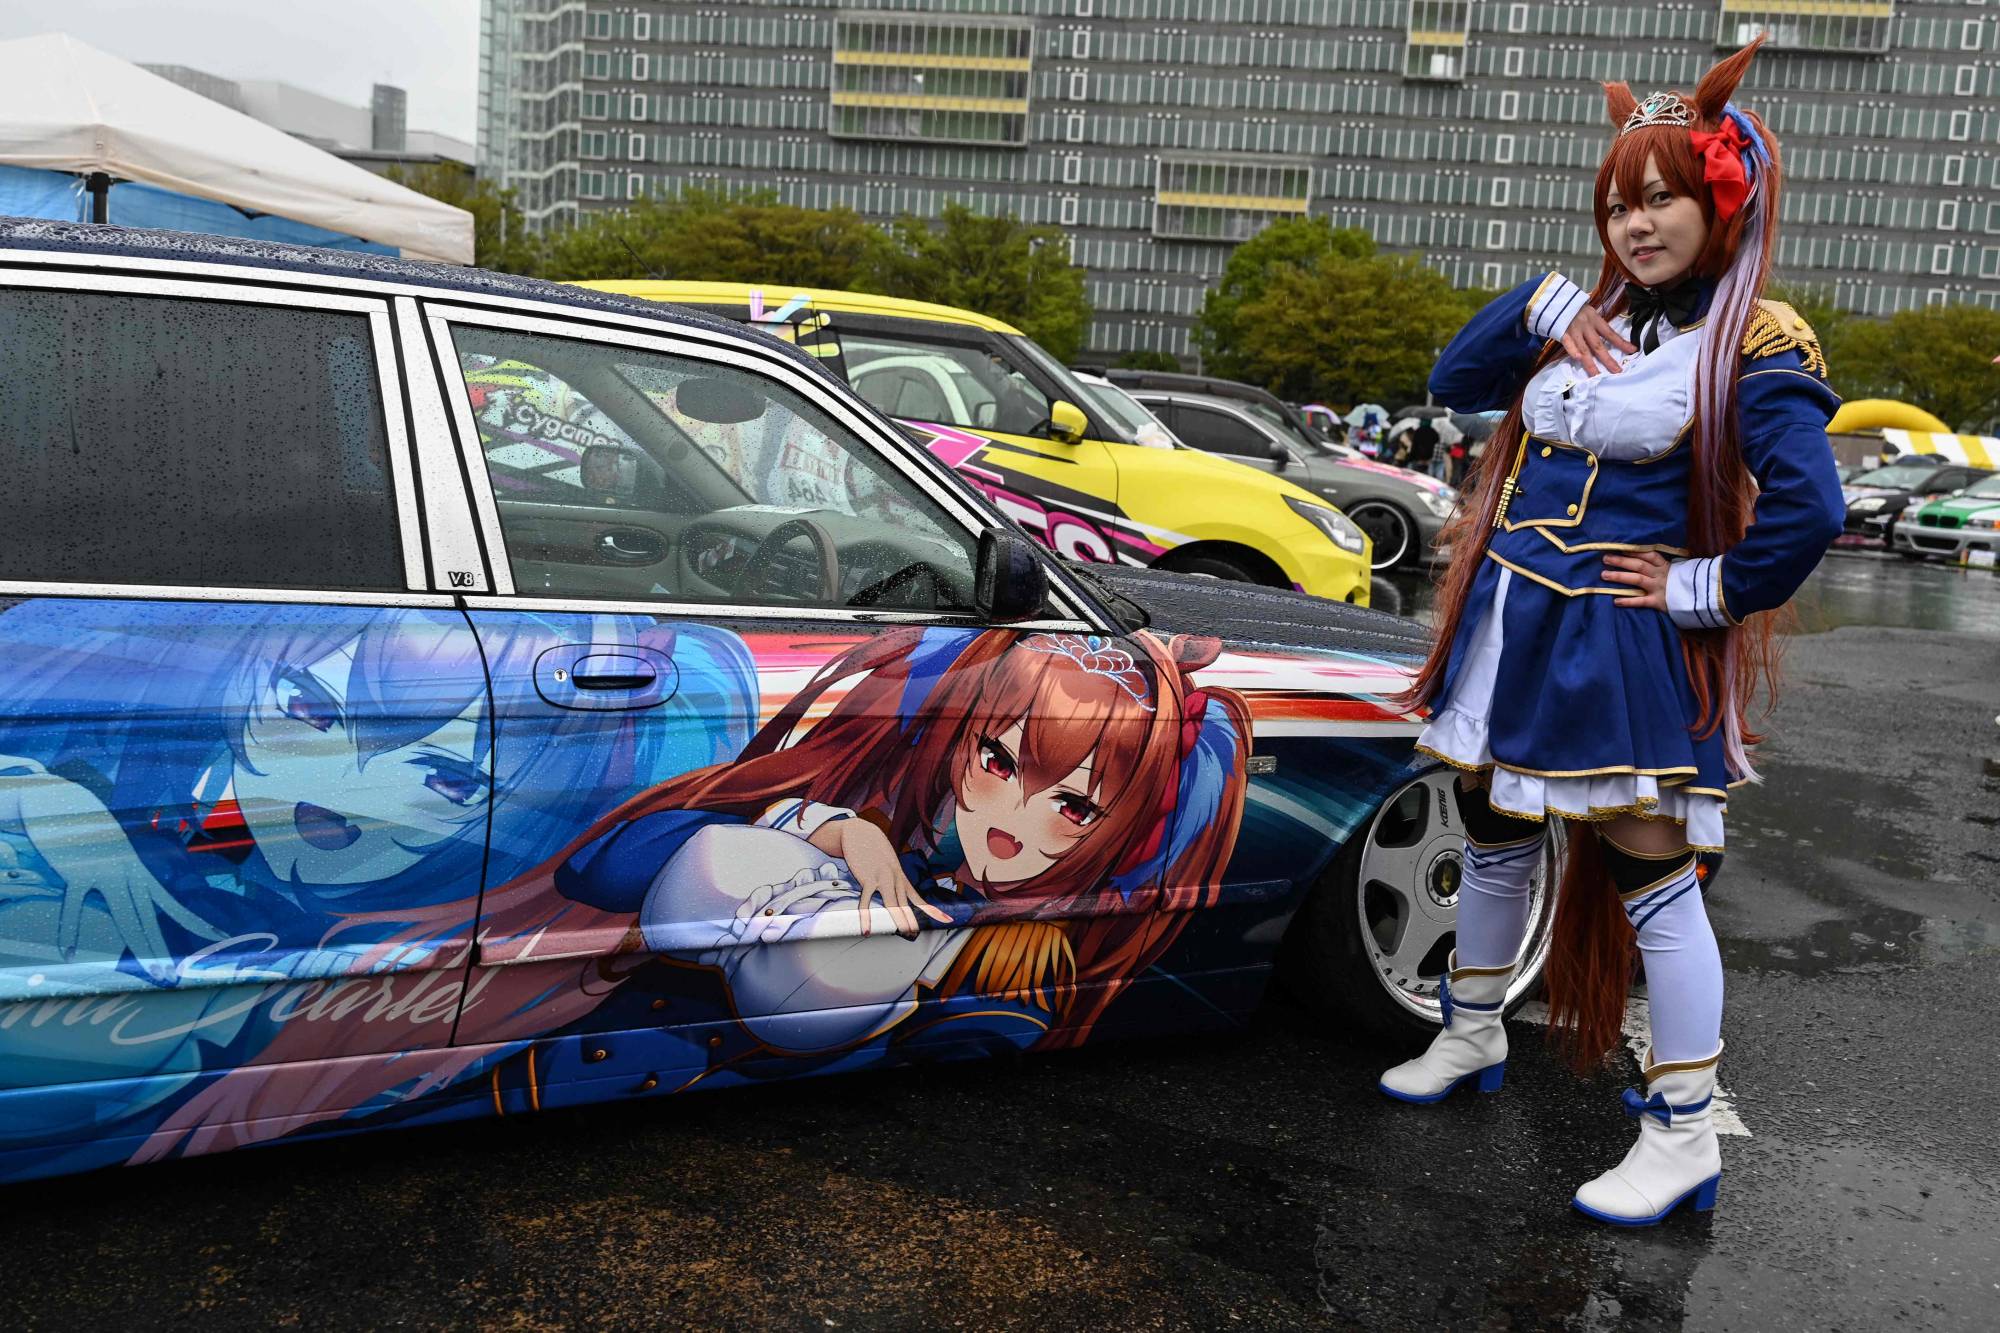 Gaudy cartoon cars turn heads in Japan  The Japan Times